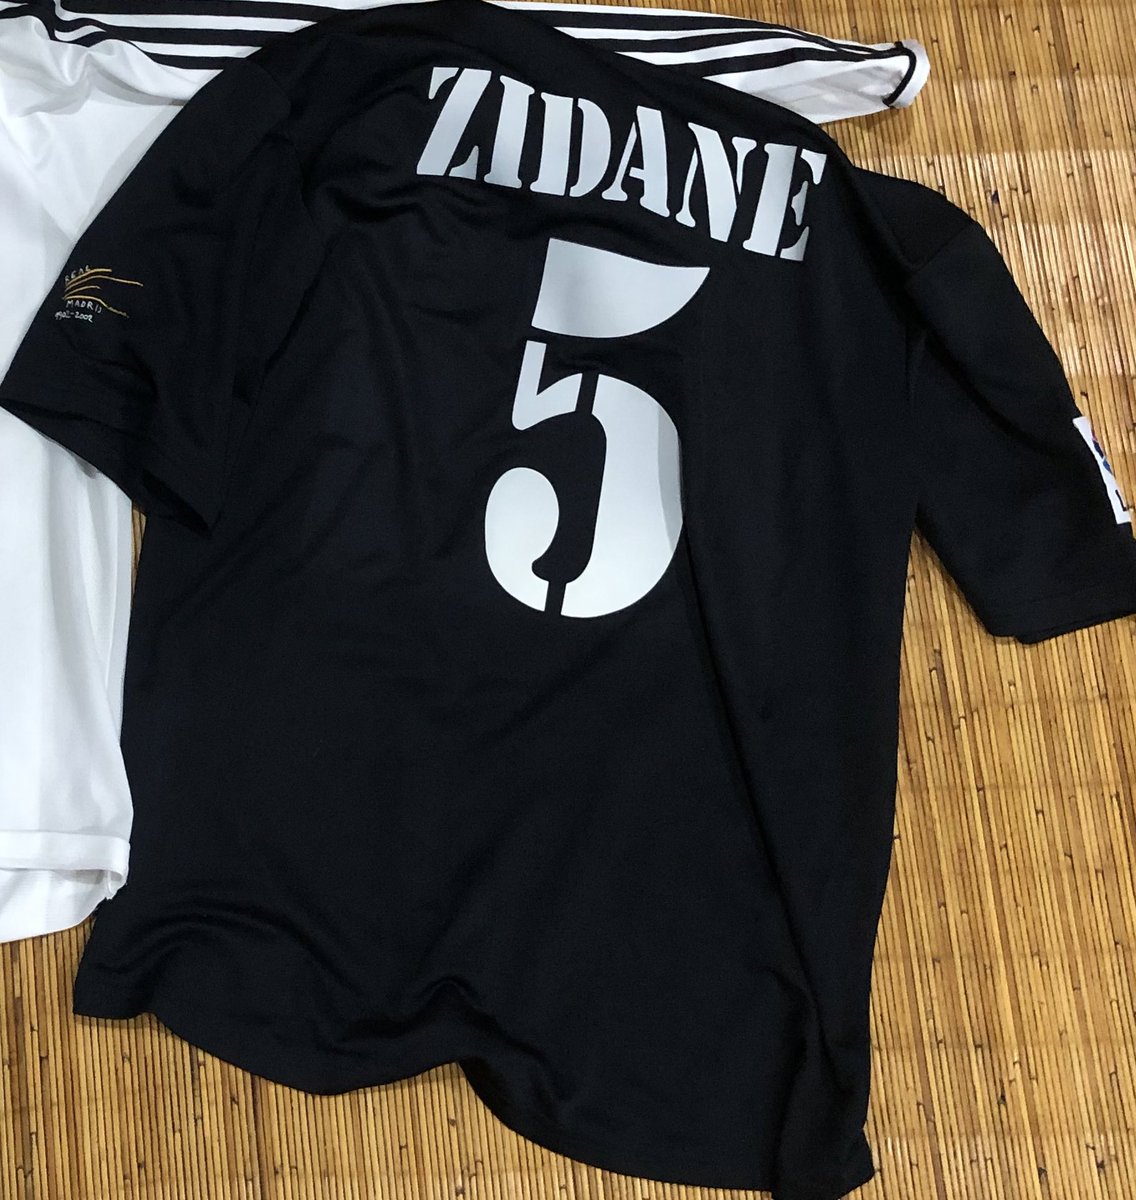 Centenary ✅
Zidane ✅ 
🤝